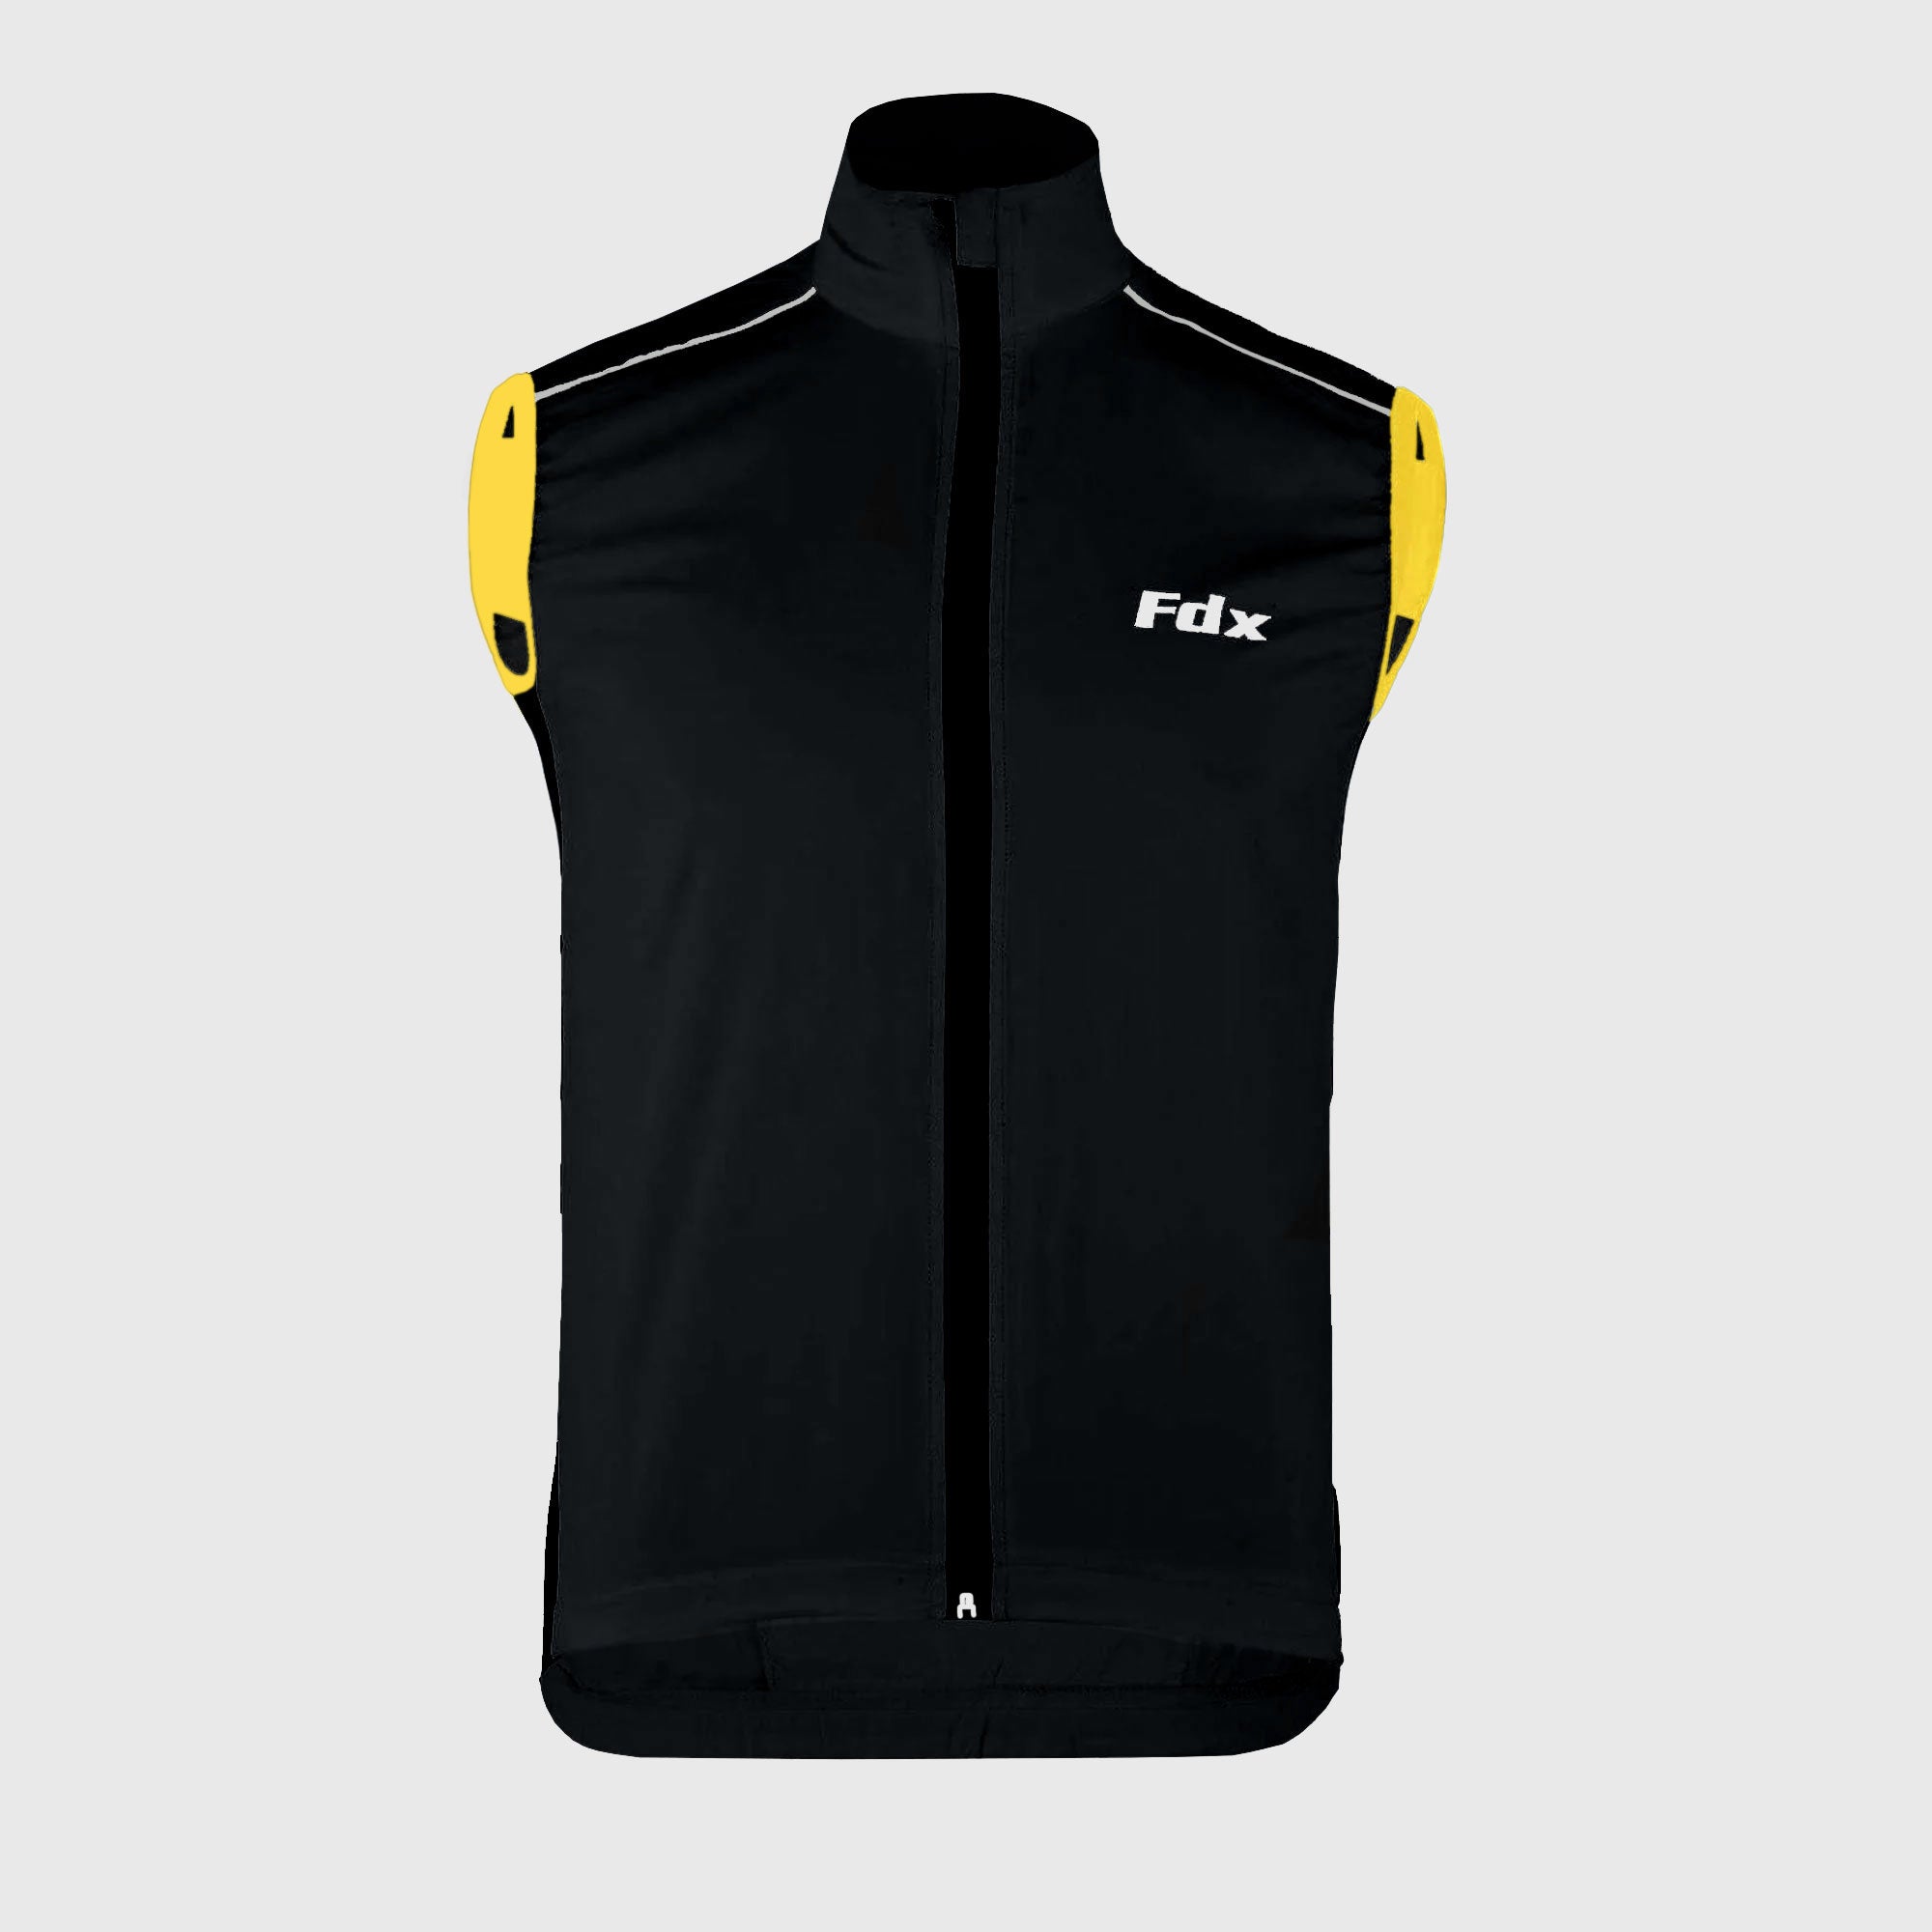 Fdx Men's Best Black & Yellow Cycling Gilet Sleeveless Vest for Winter Clothing Hi-Viz Reflectors, Lightweight, Windproof, Waterproof & Pockets - Dart